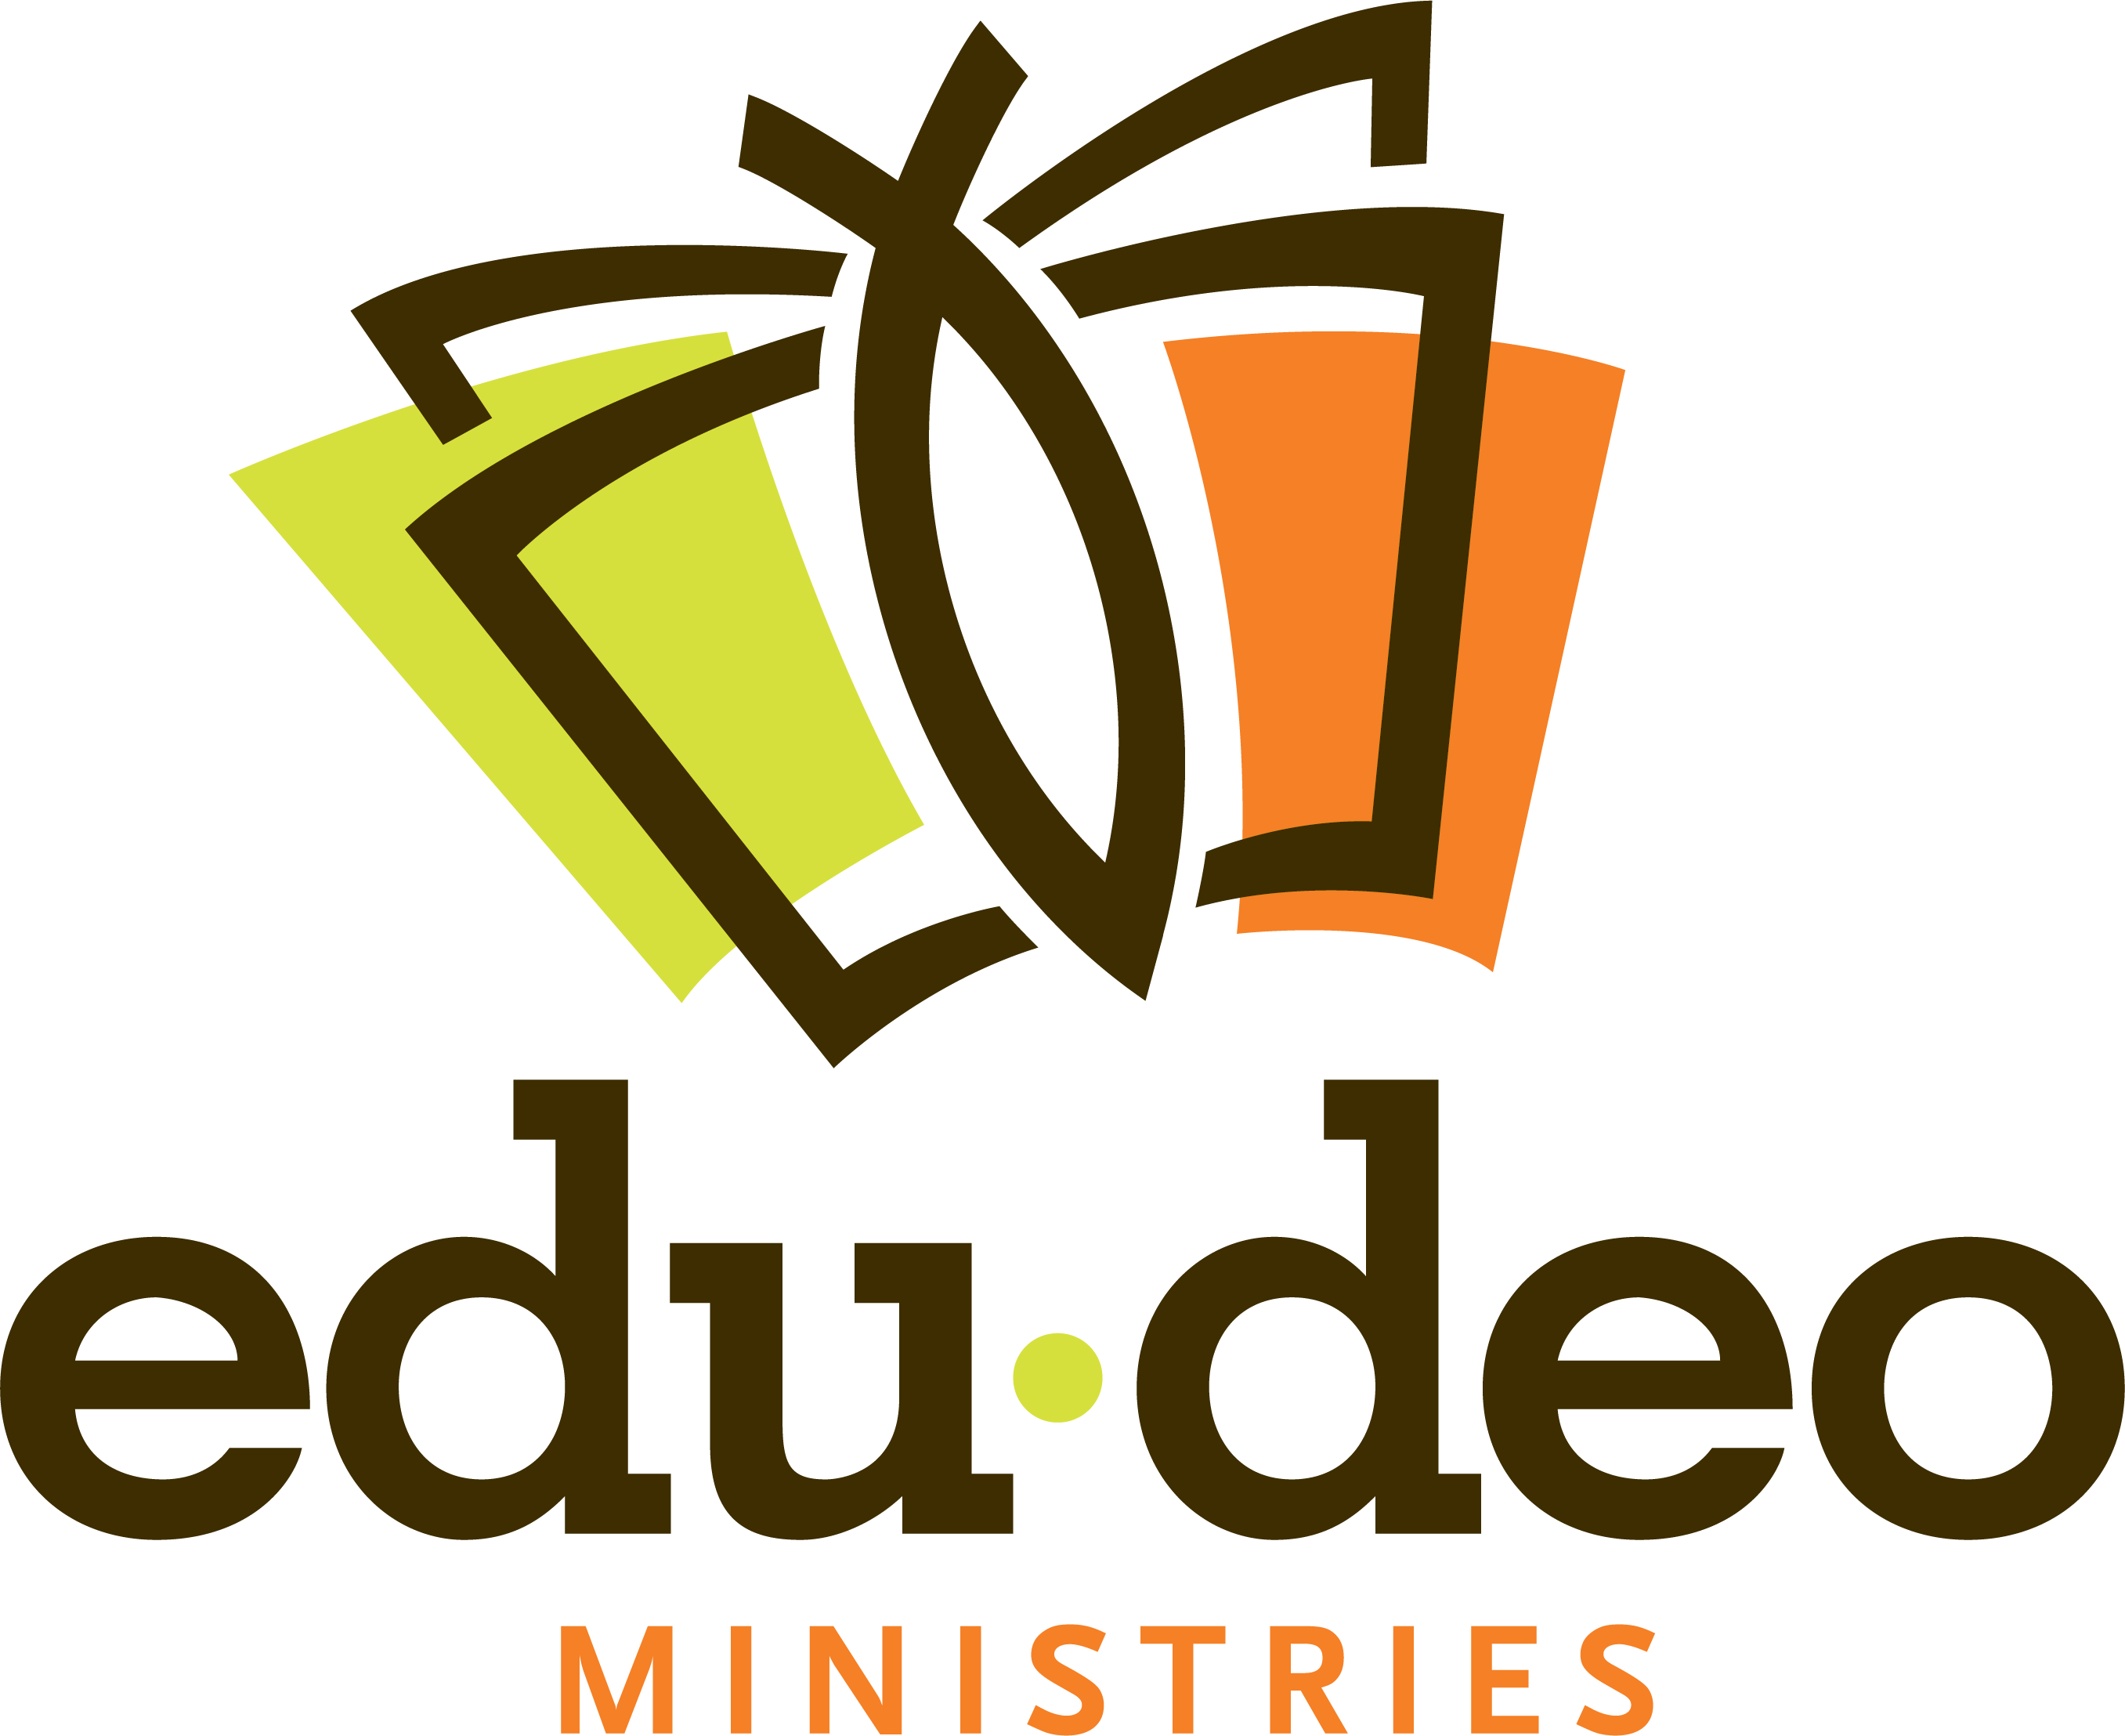 Edu deo ministries logo